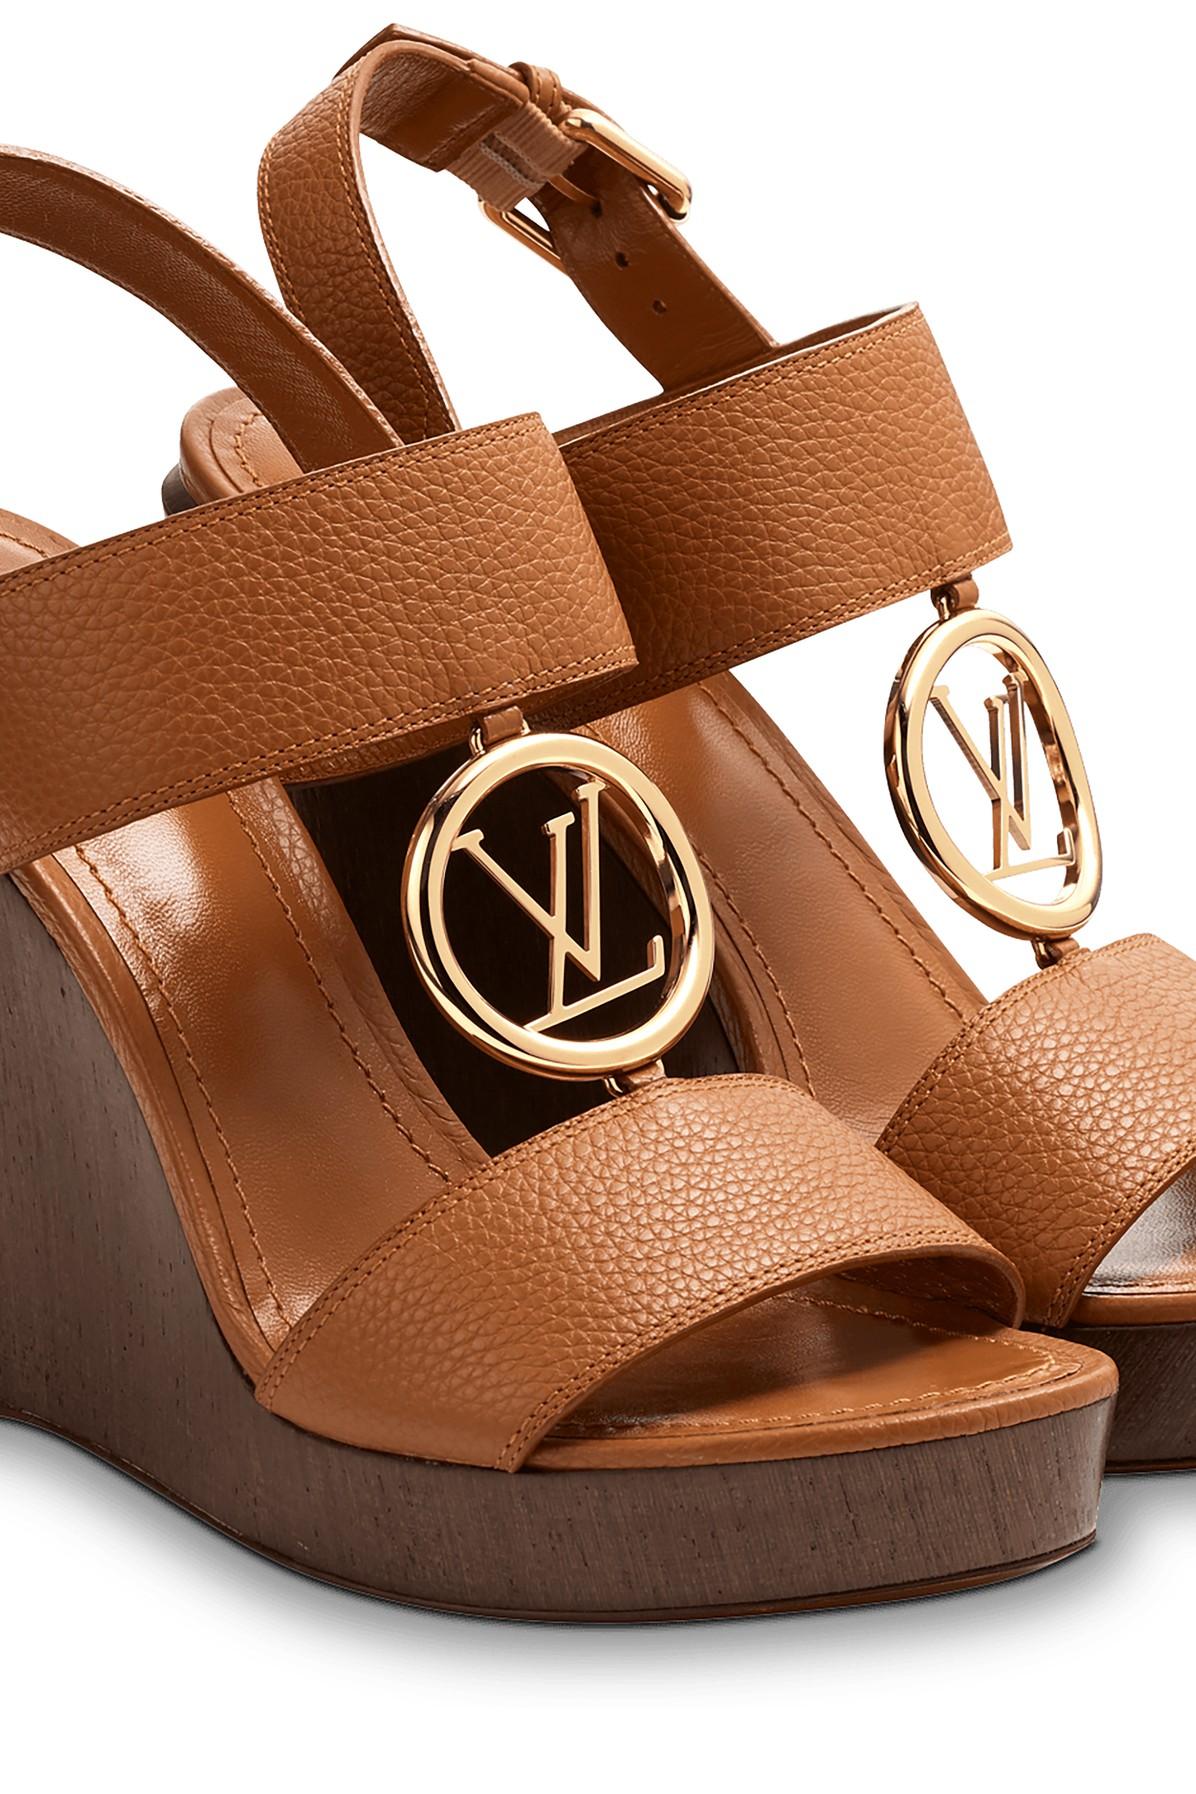 Louis Vuitton Brown Wedge Tulipe Sandals